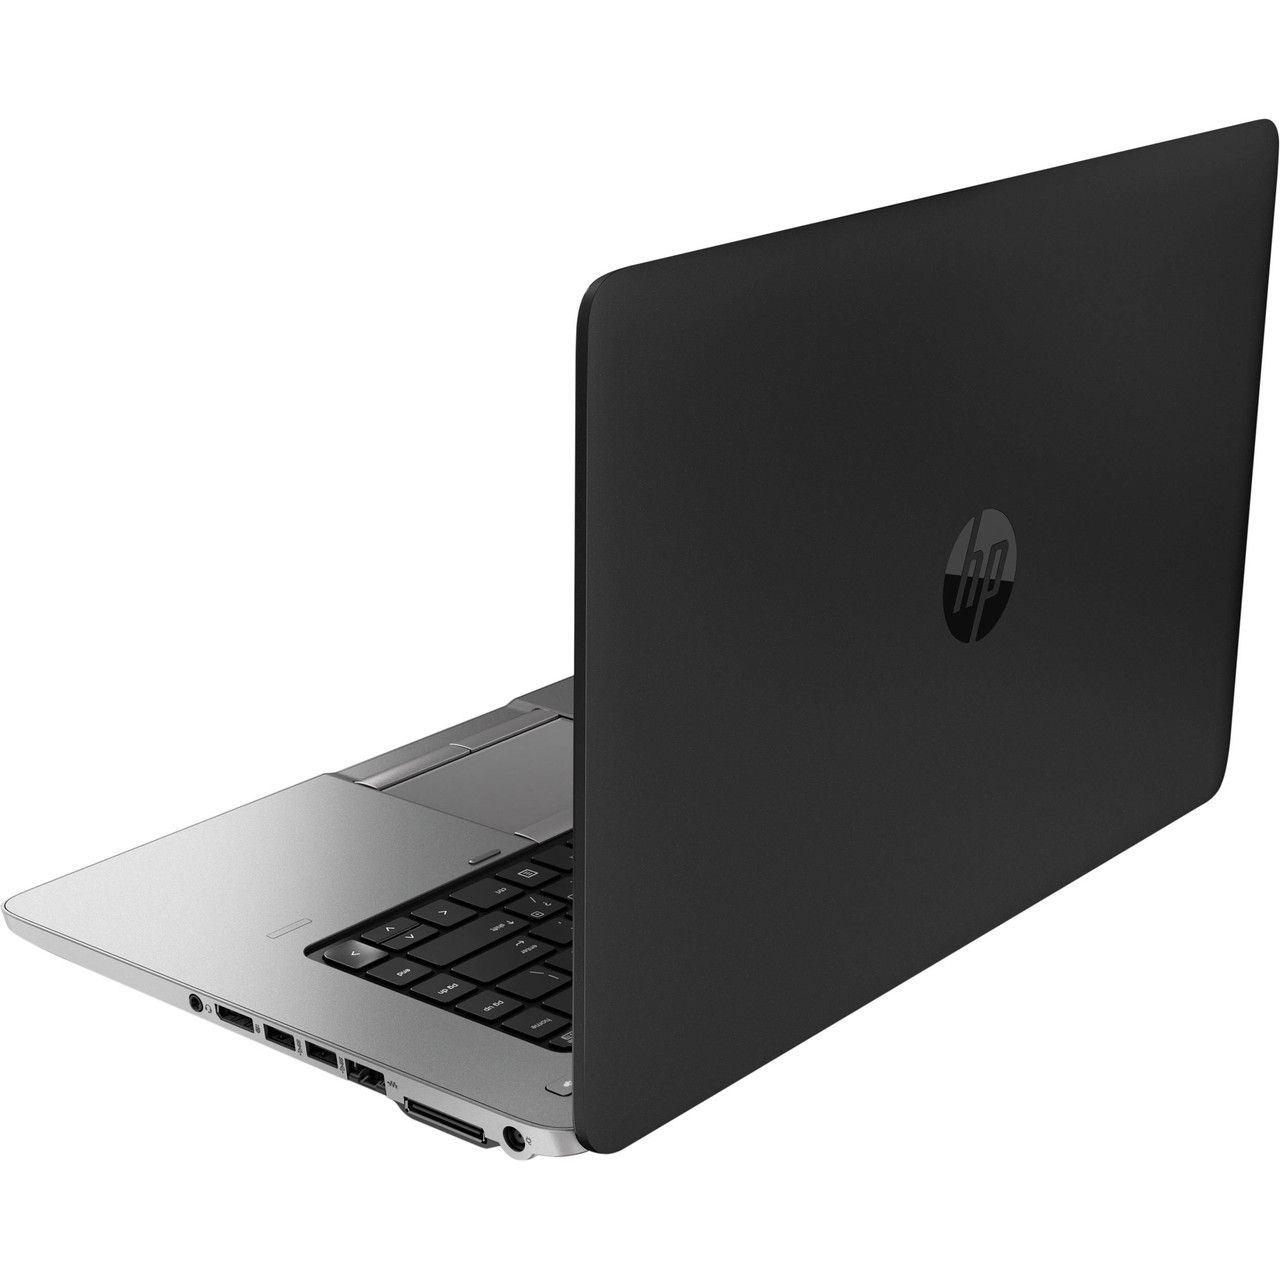 HP Elitebook 840 G2 14" Laptop Intel Core i5 2.30 GHz 8 GB 256 GB SSD W10P Touch | Refurbished